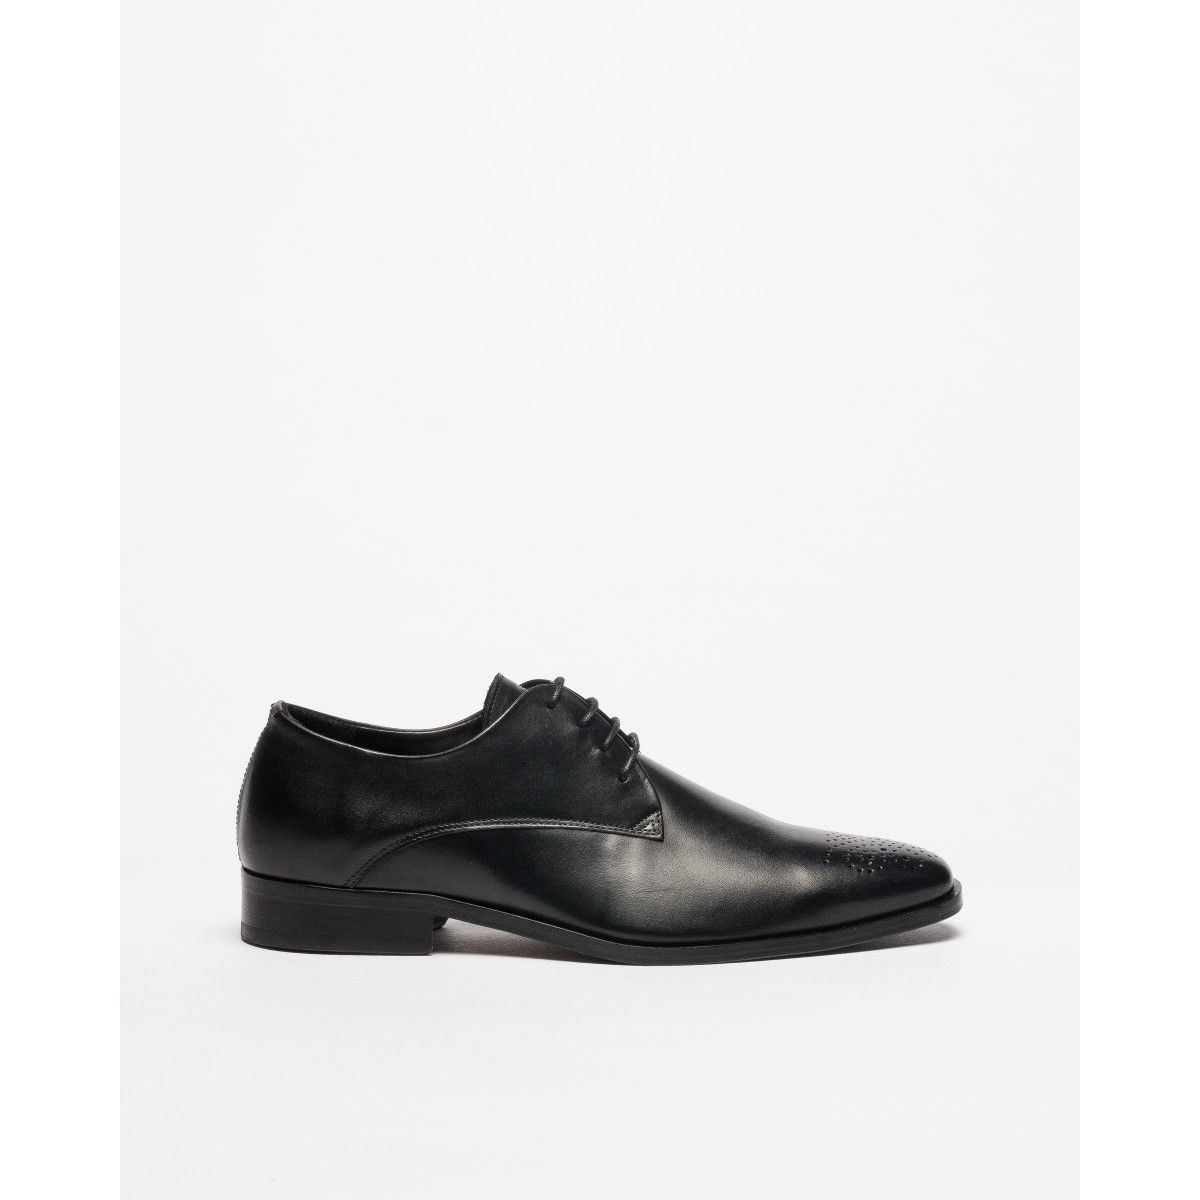 PROF 8543V9 Shoes Black - 437-8543-51 | PROF Online Store